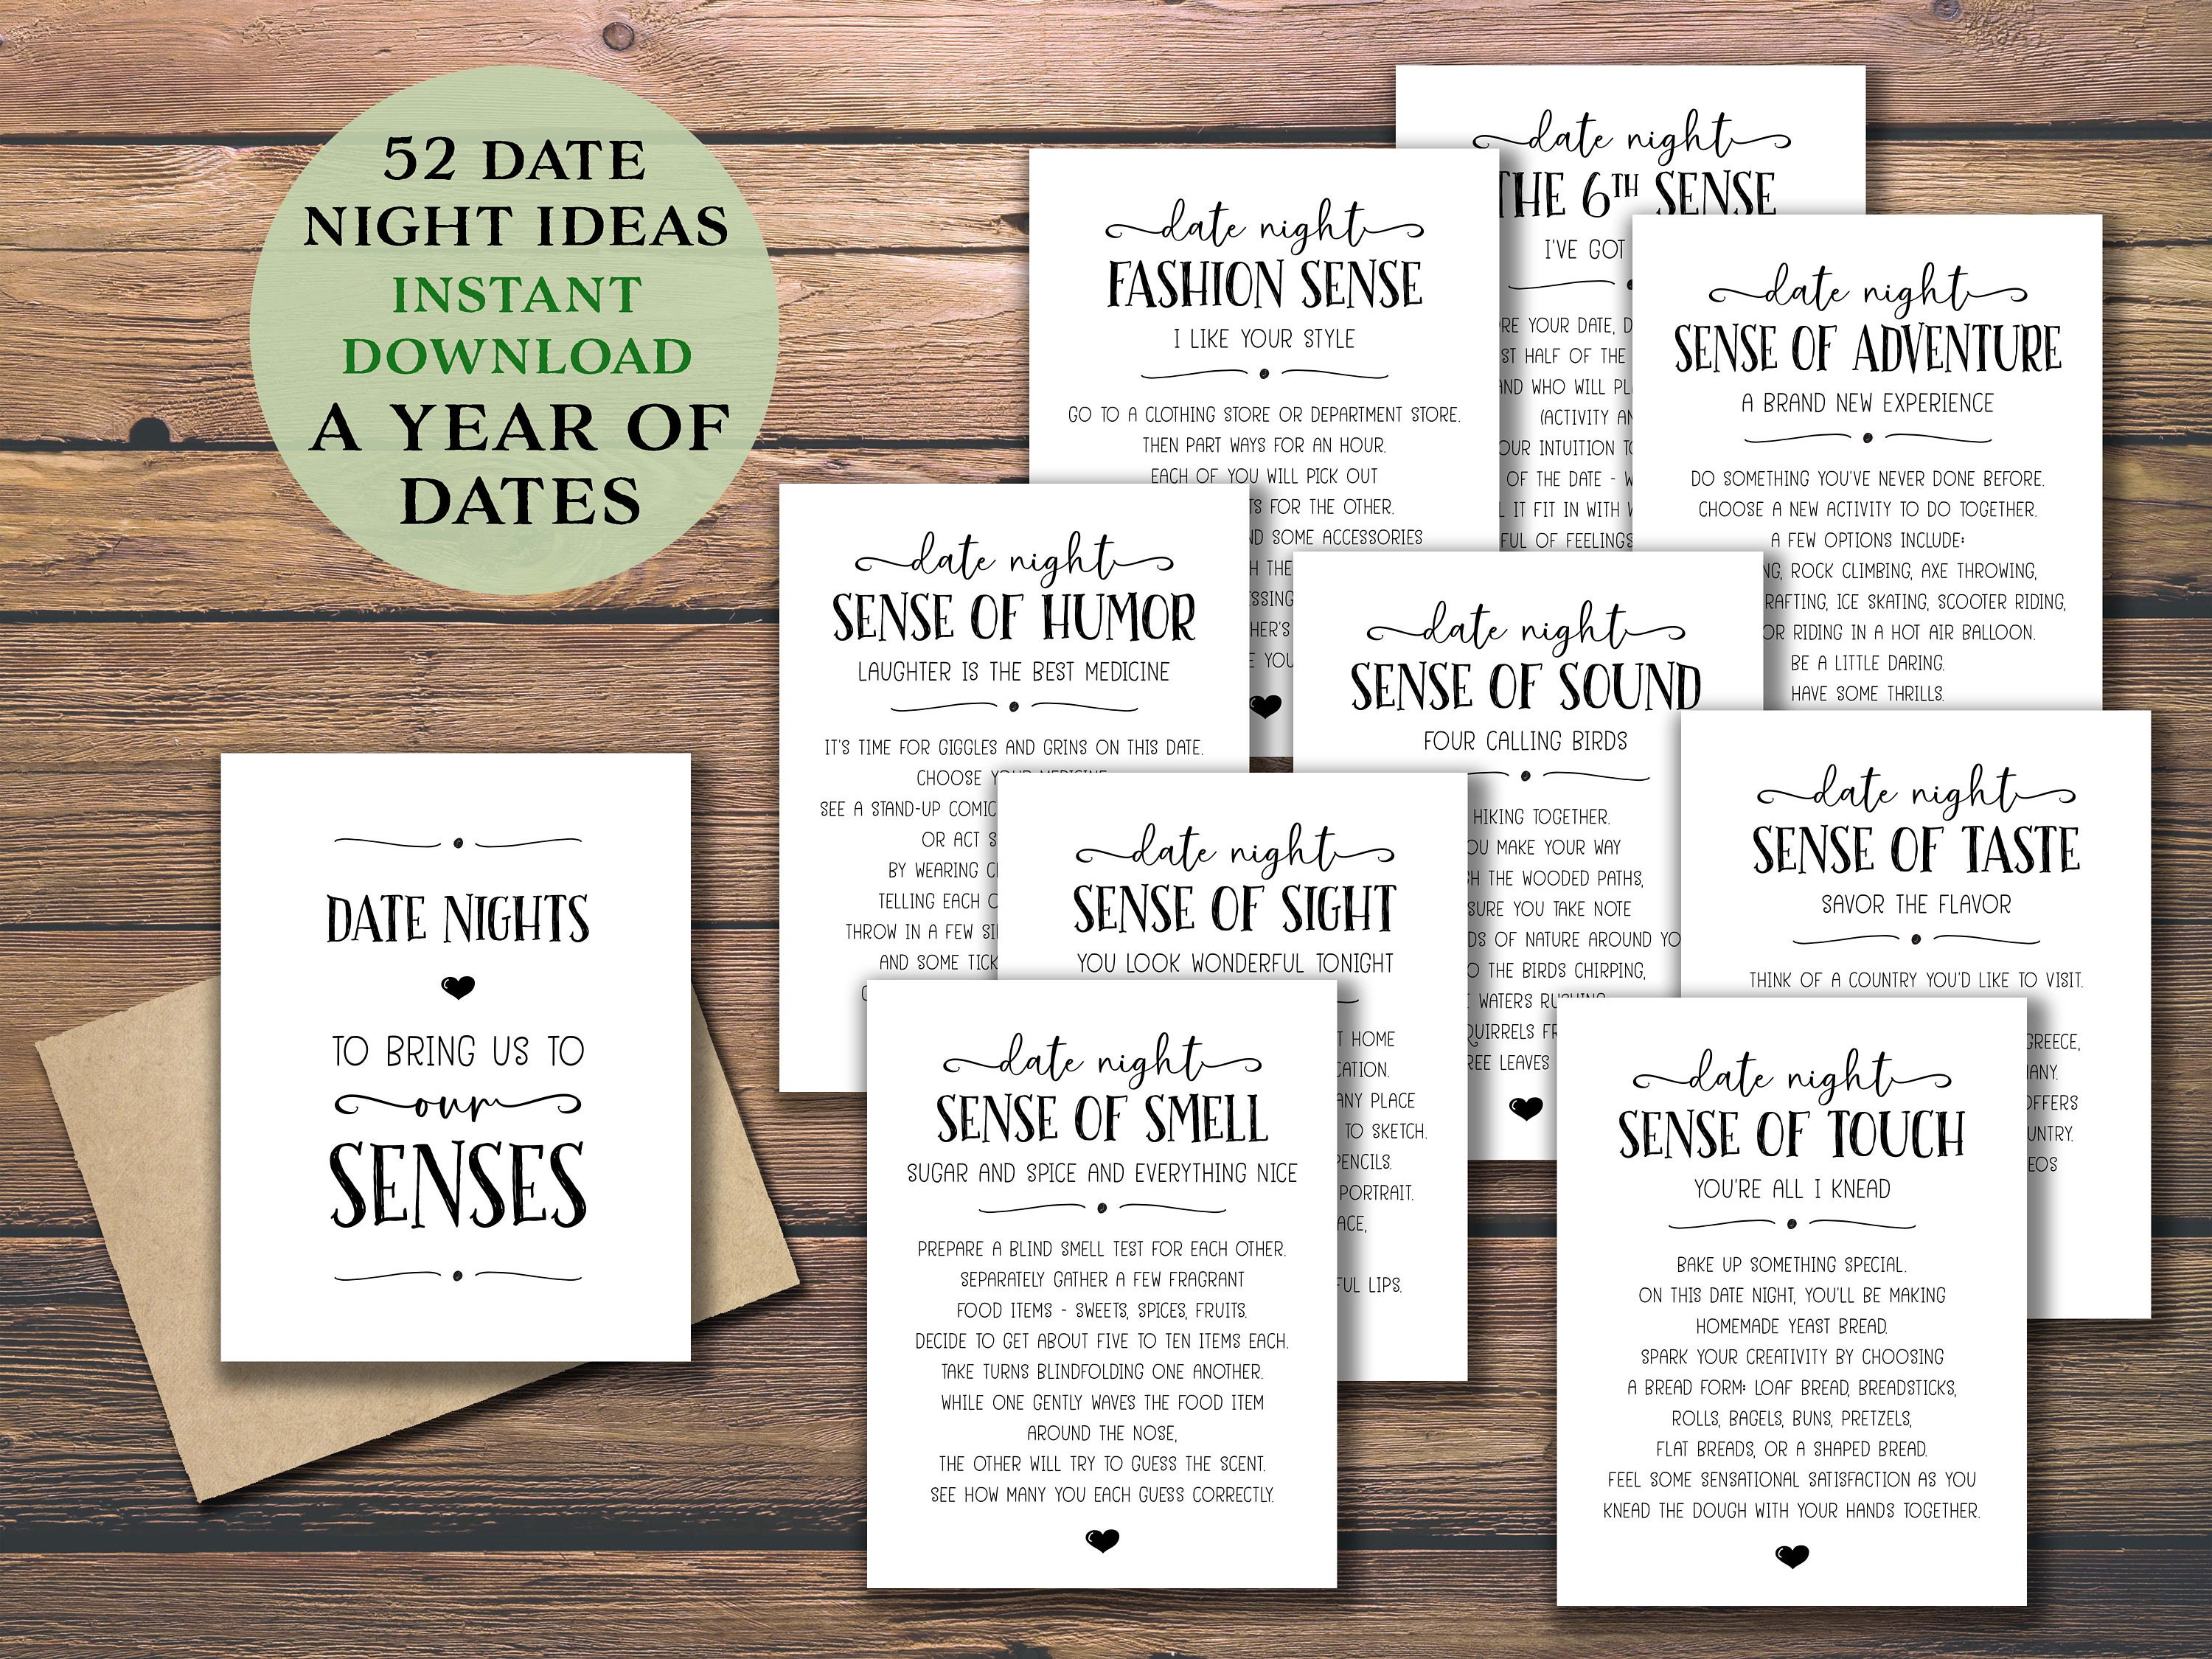 5 Senses Gift Tags & Birthday Card. Instant Download Printable. Five Senses  Gift for Him Her Child Kid Parent Friend Boyfriend Girlfriend. 